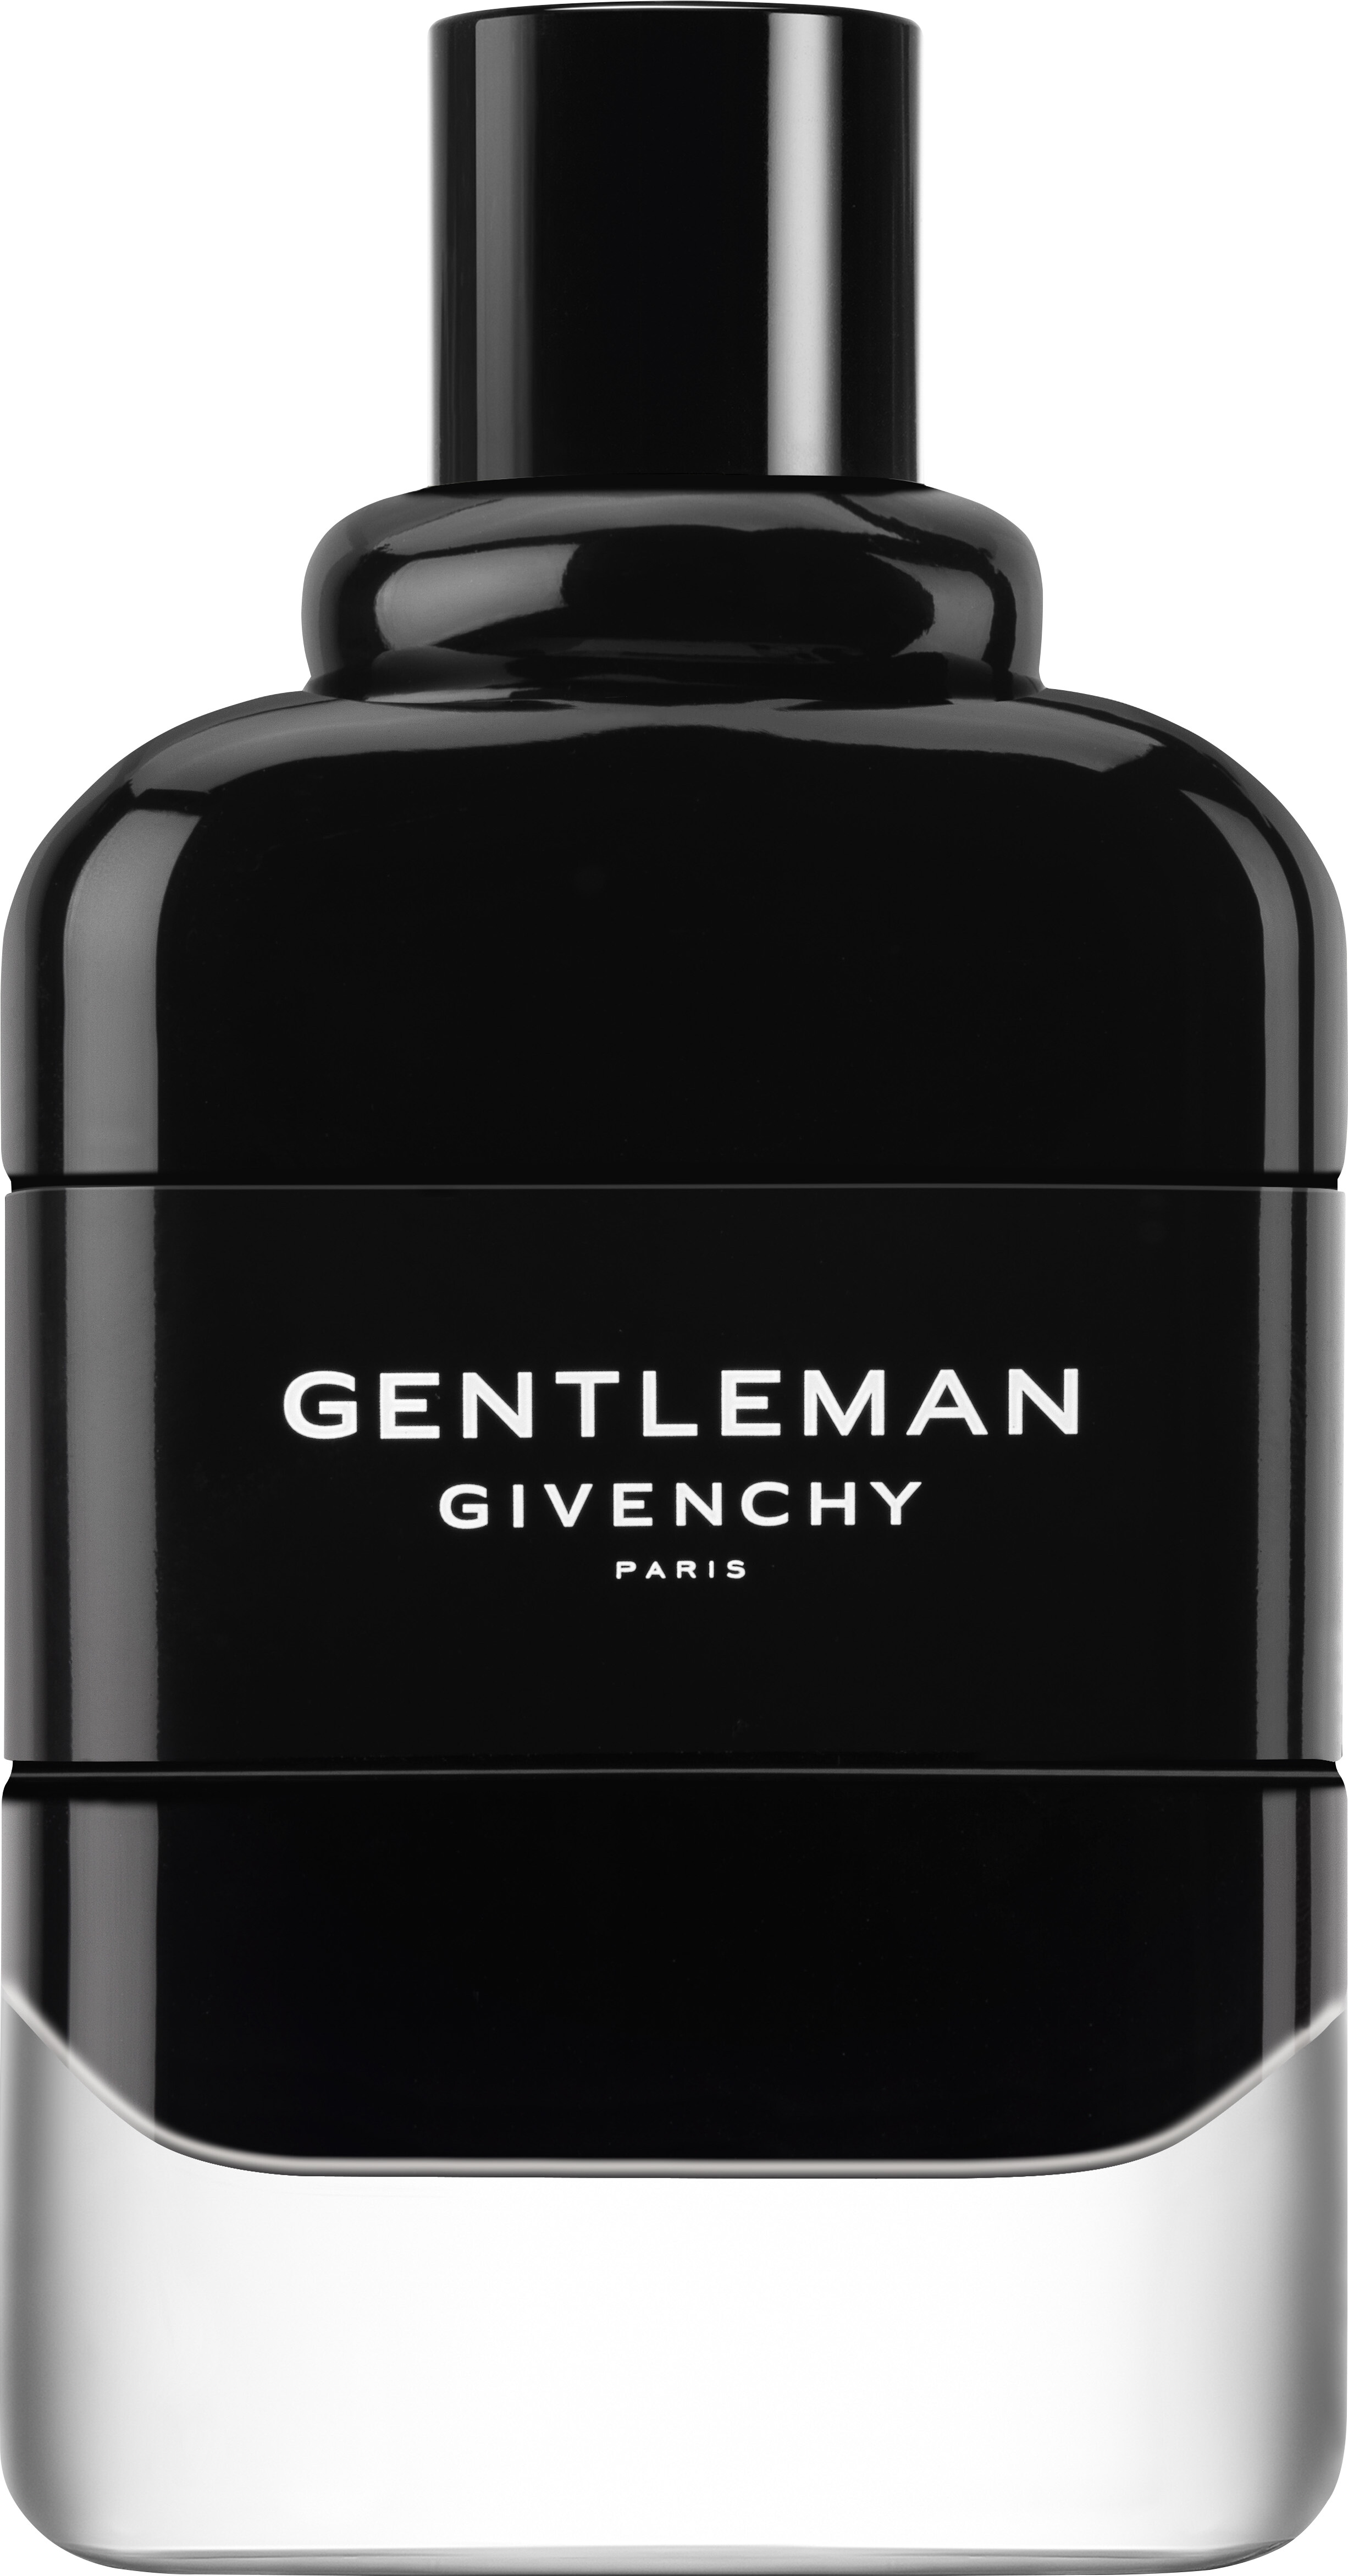 gentleman givenchy paris 50ml